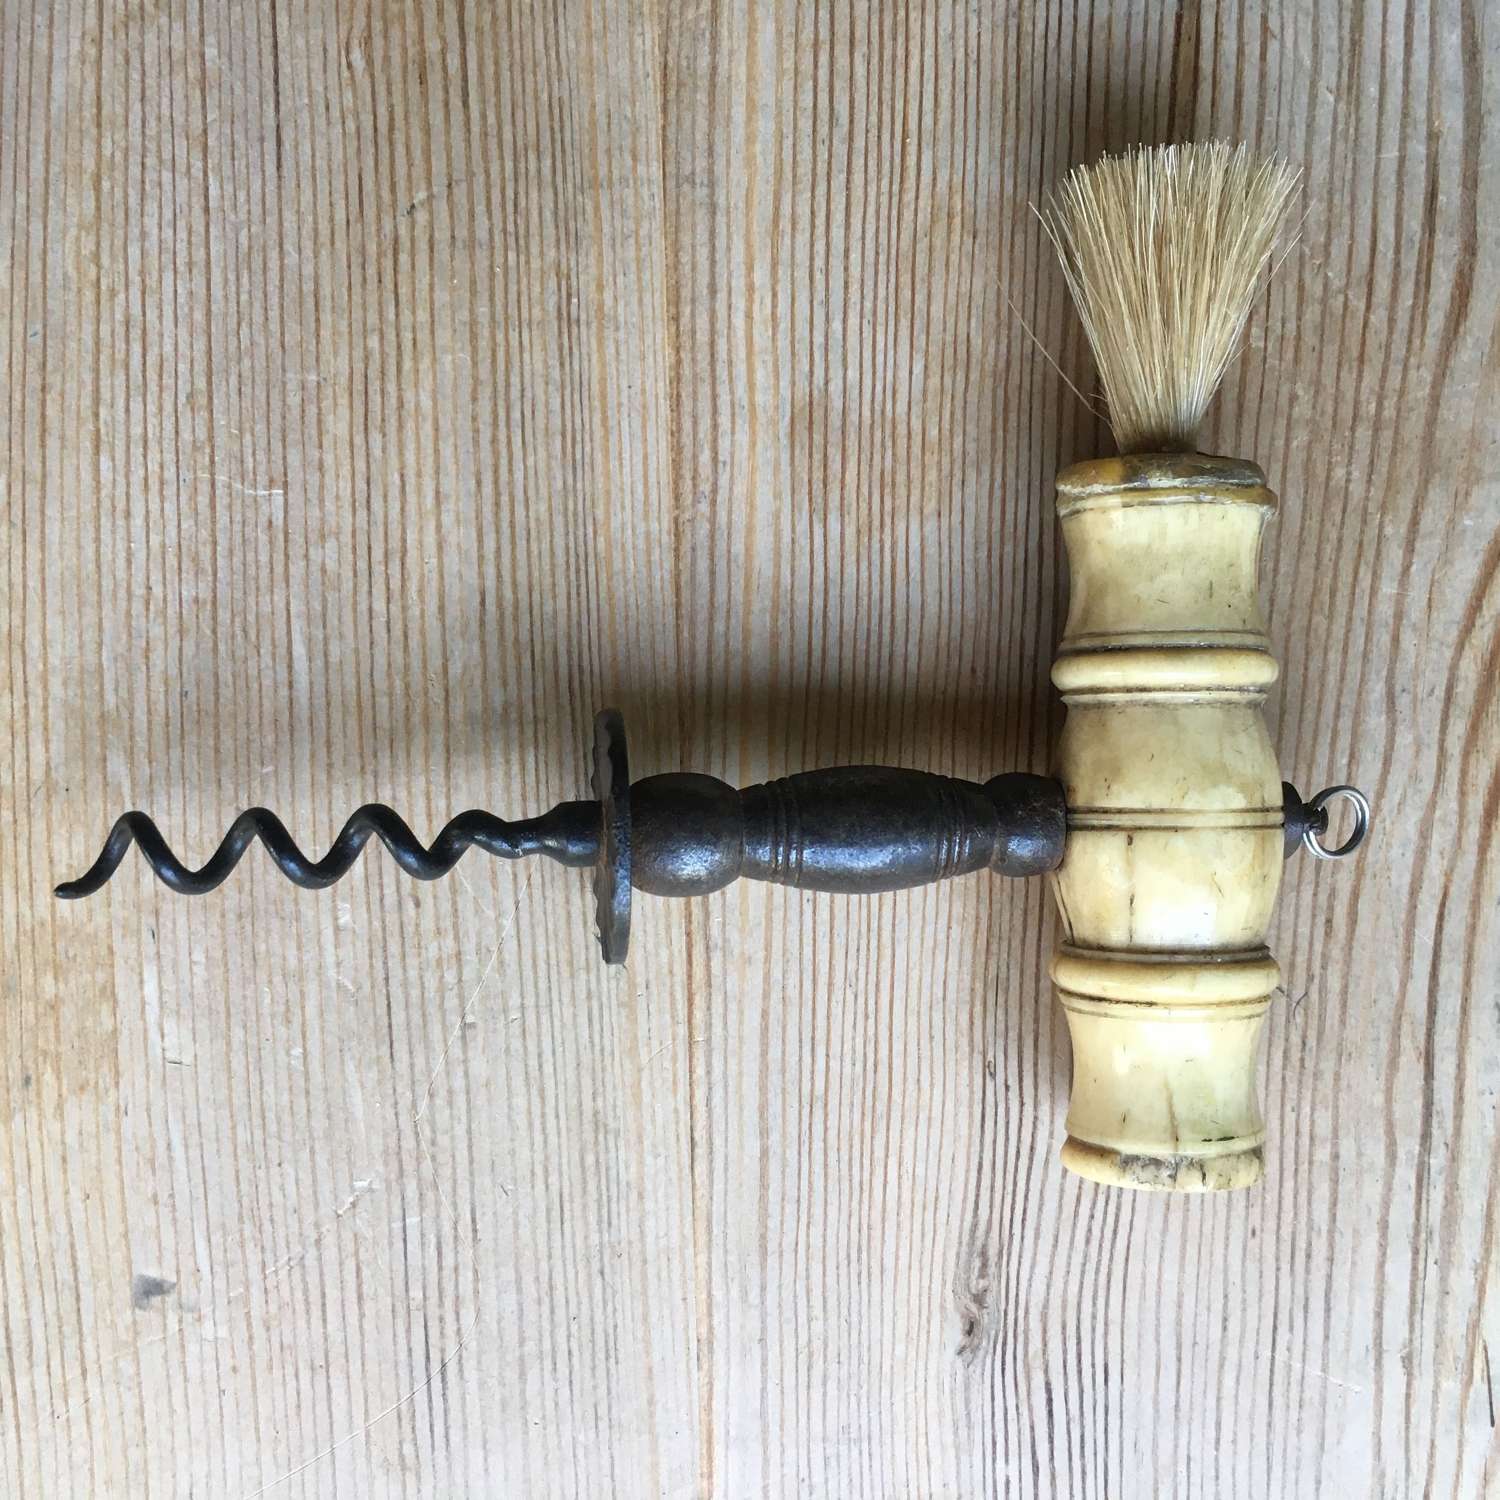 Corkscrew of Henshall type with bone handle and brush